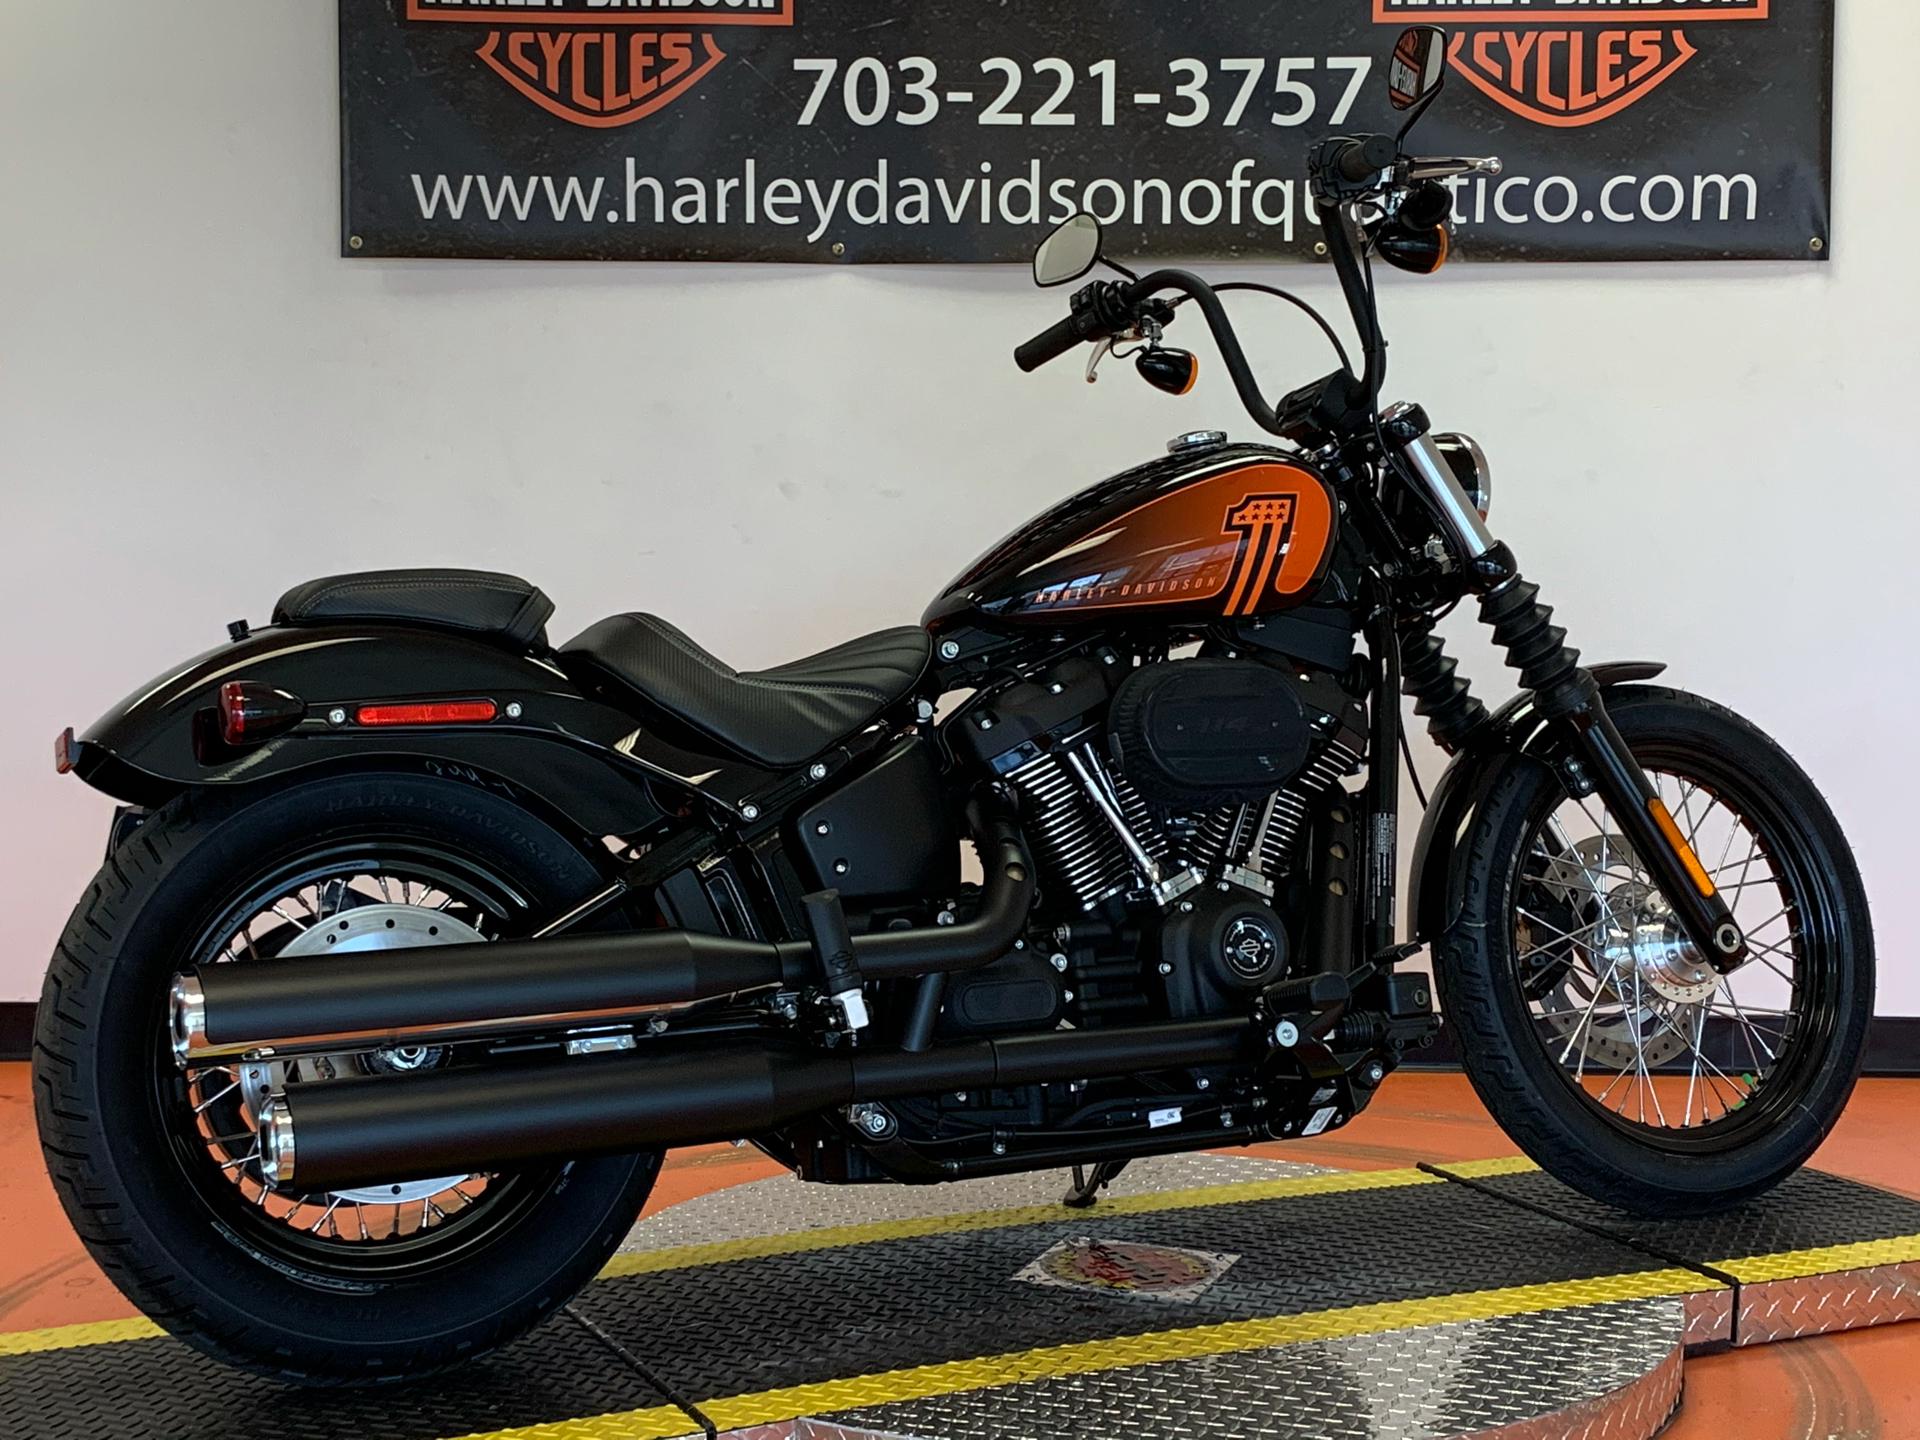 New 2021 Harley Davidson Street Bob 114 Vivid Black Motorcycles In Dumfries Va 012558